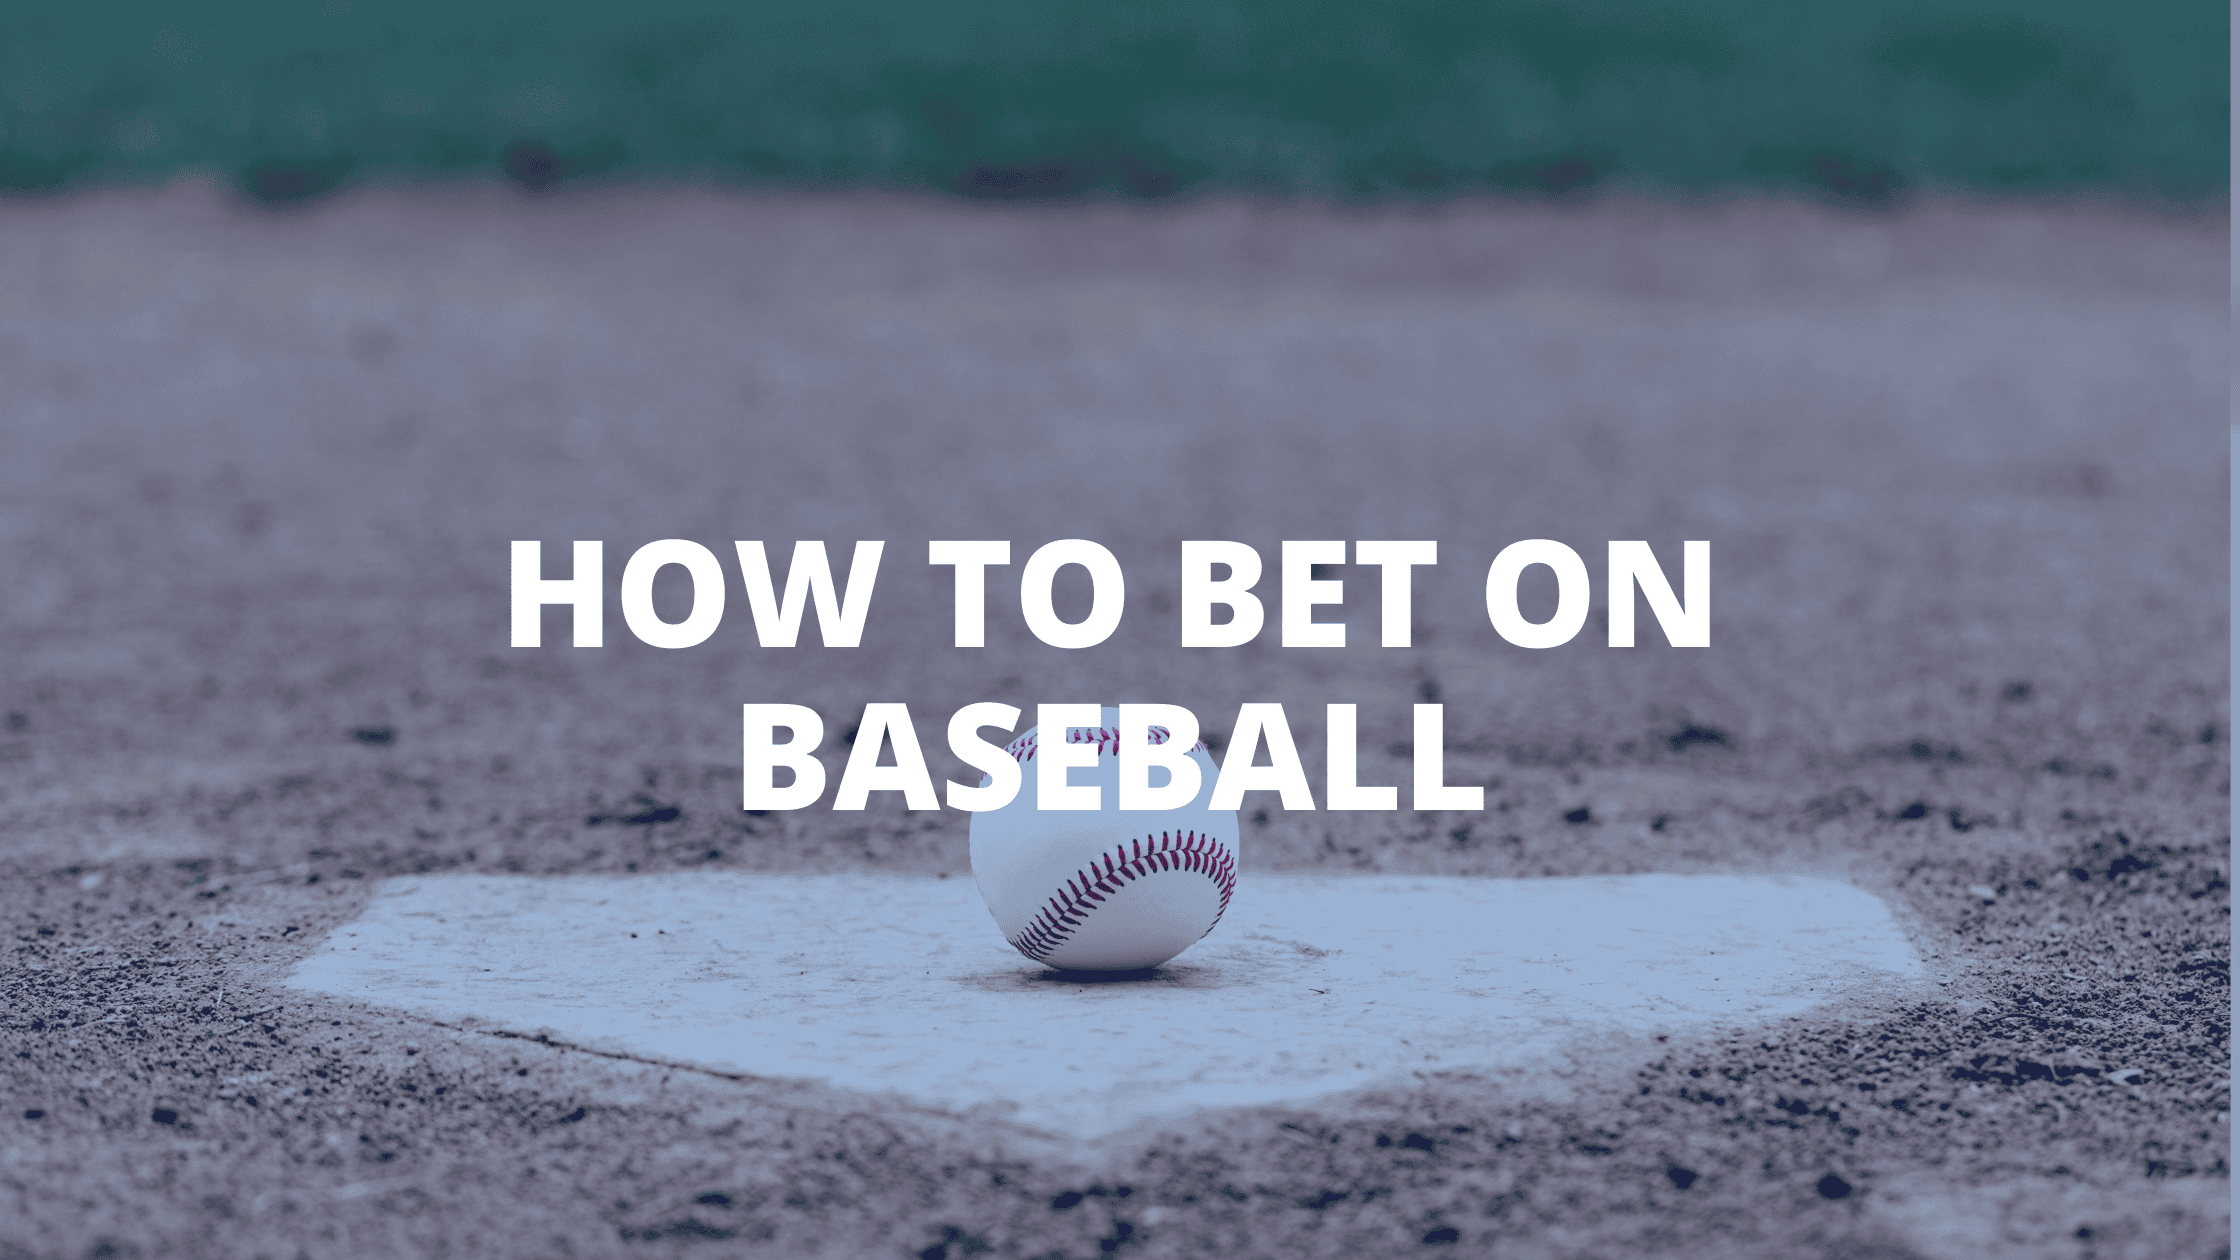 Bet on Baseball